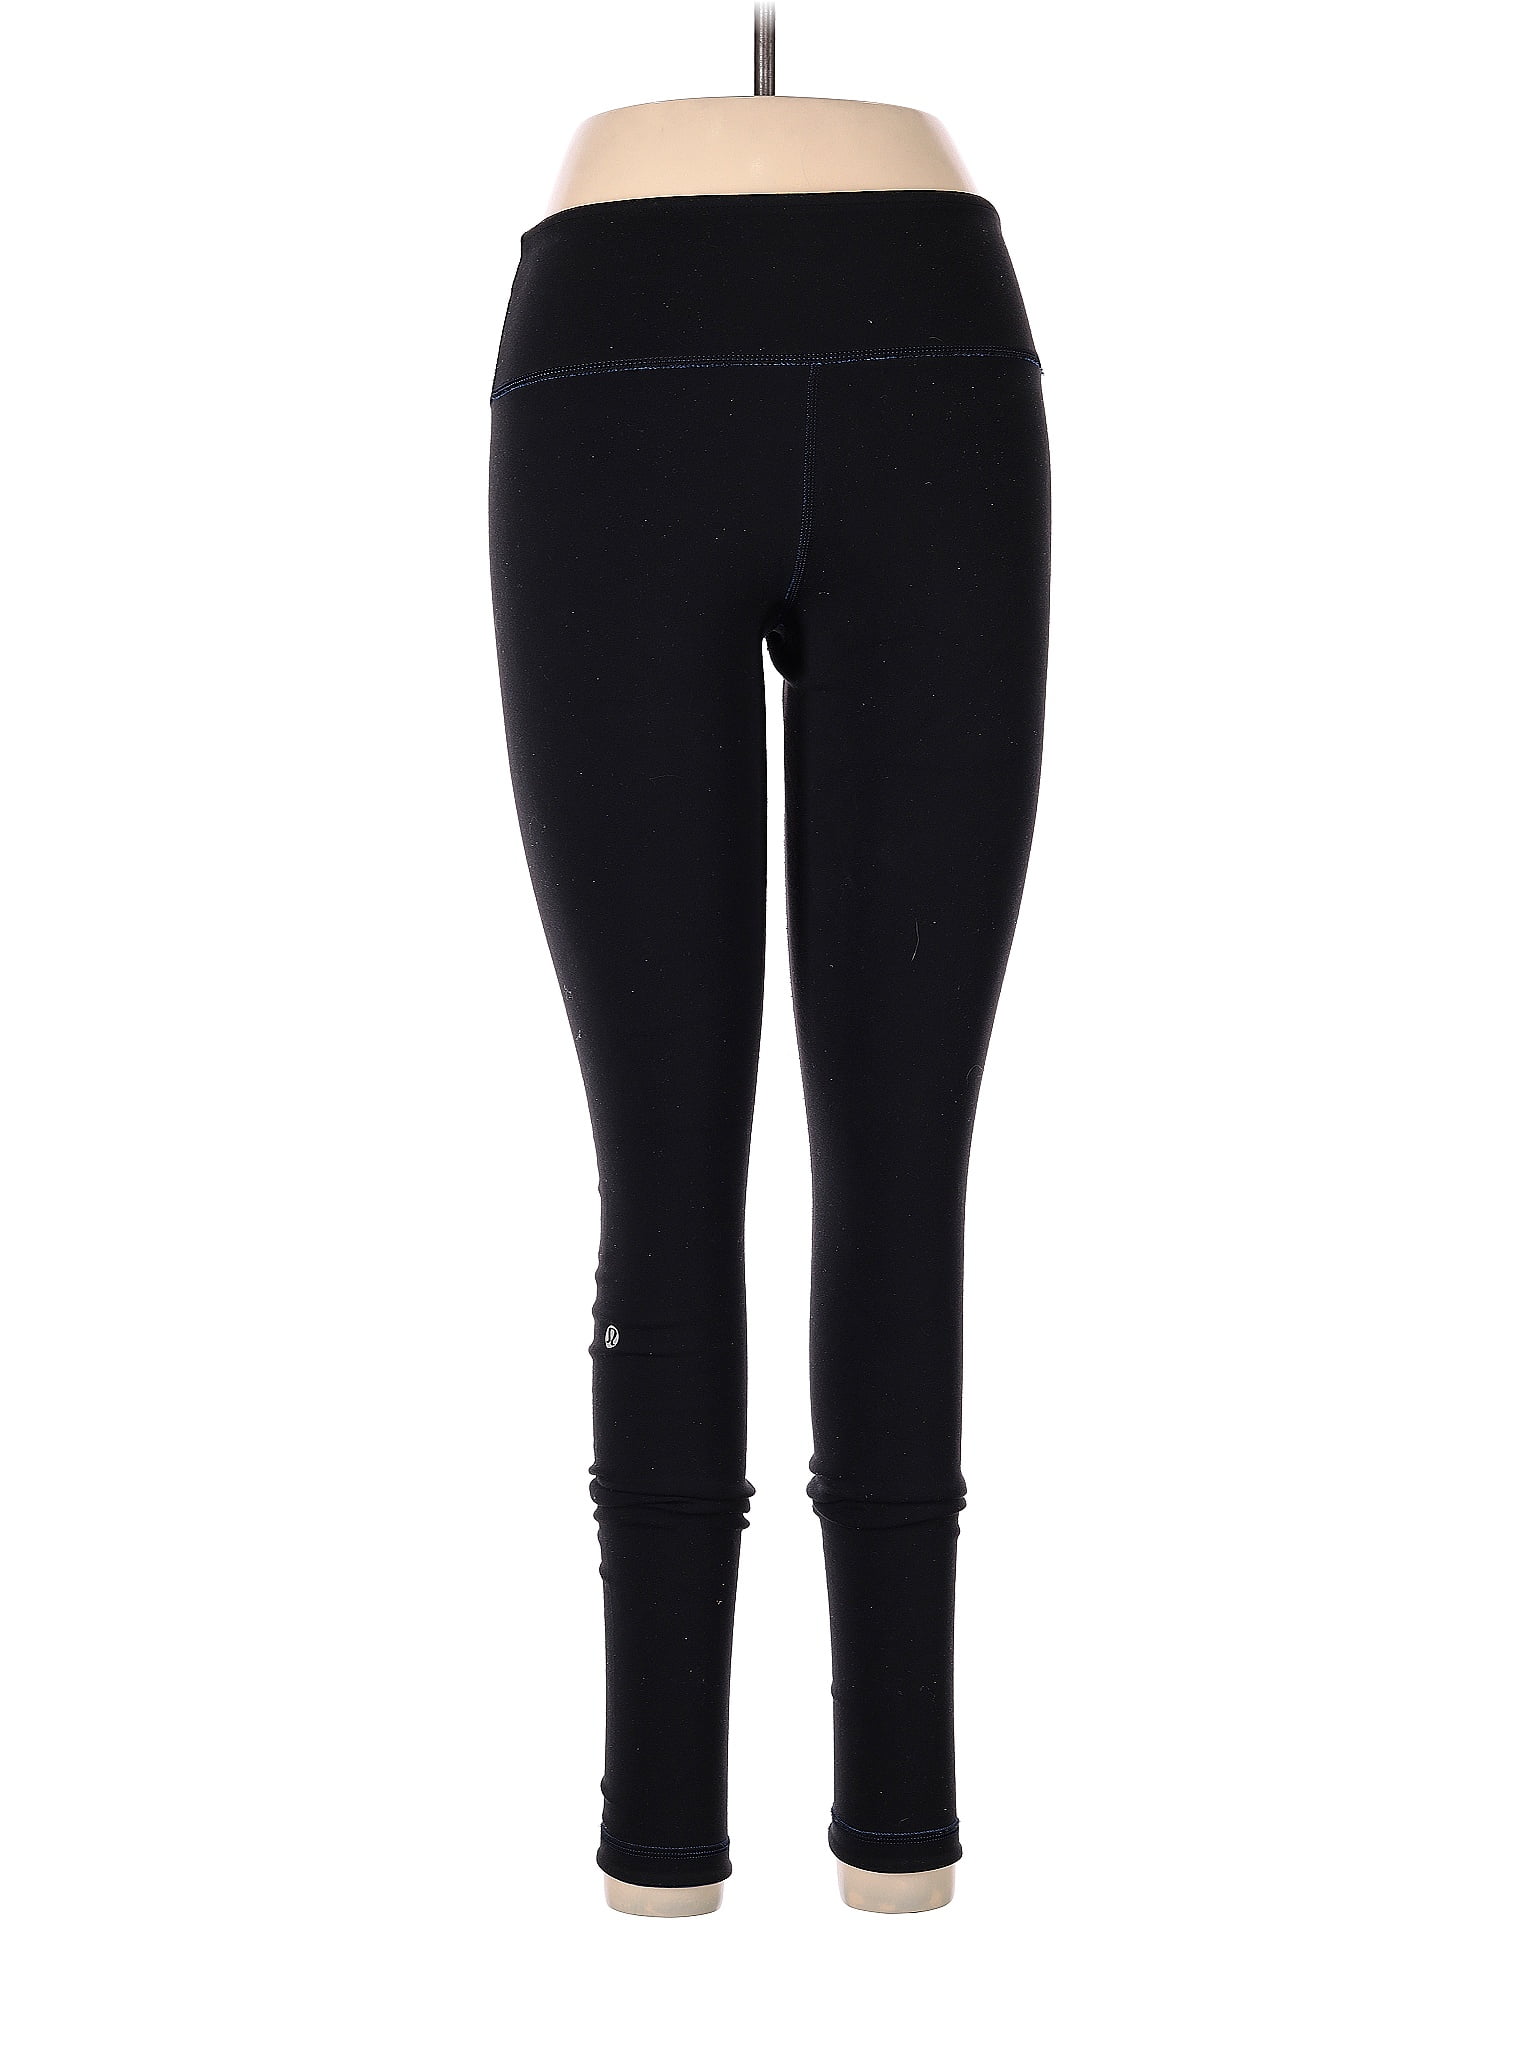 Lululemon Athletica Black Active Pants Size 6 - 72% off | thredUP